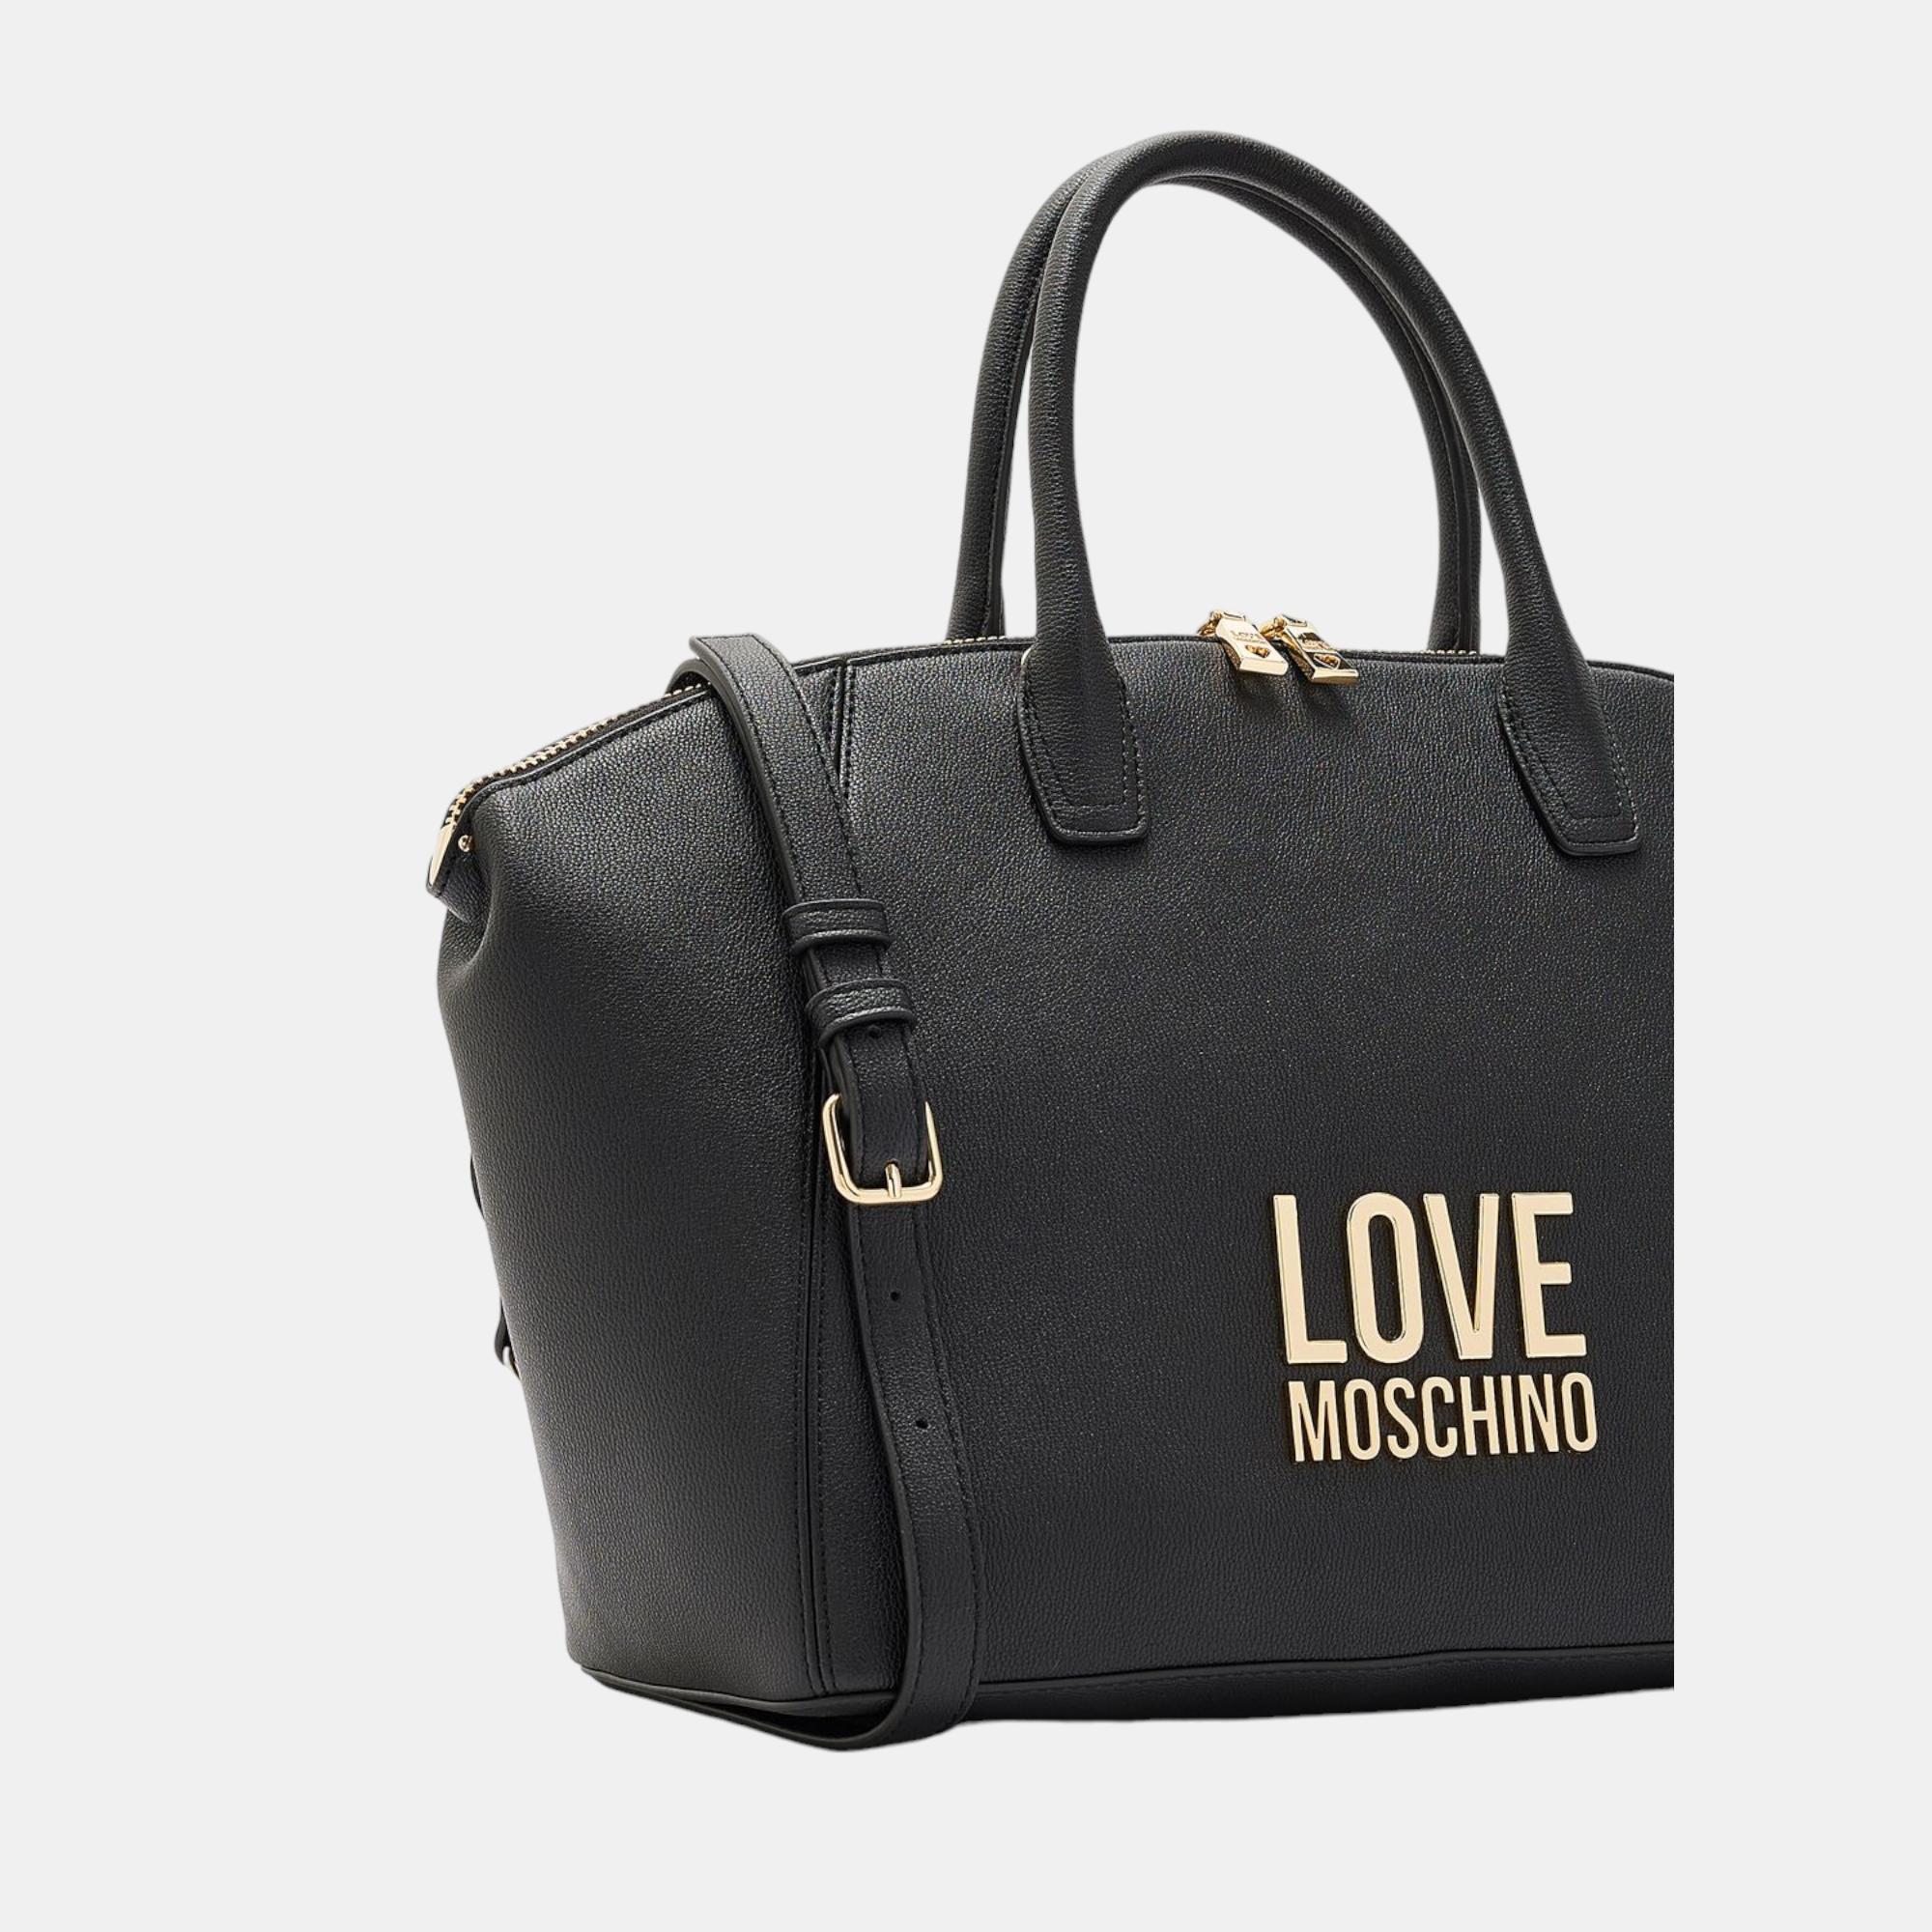 Love Moschino Black Leather Satchel